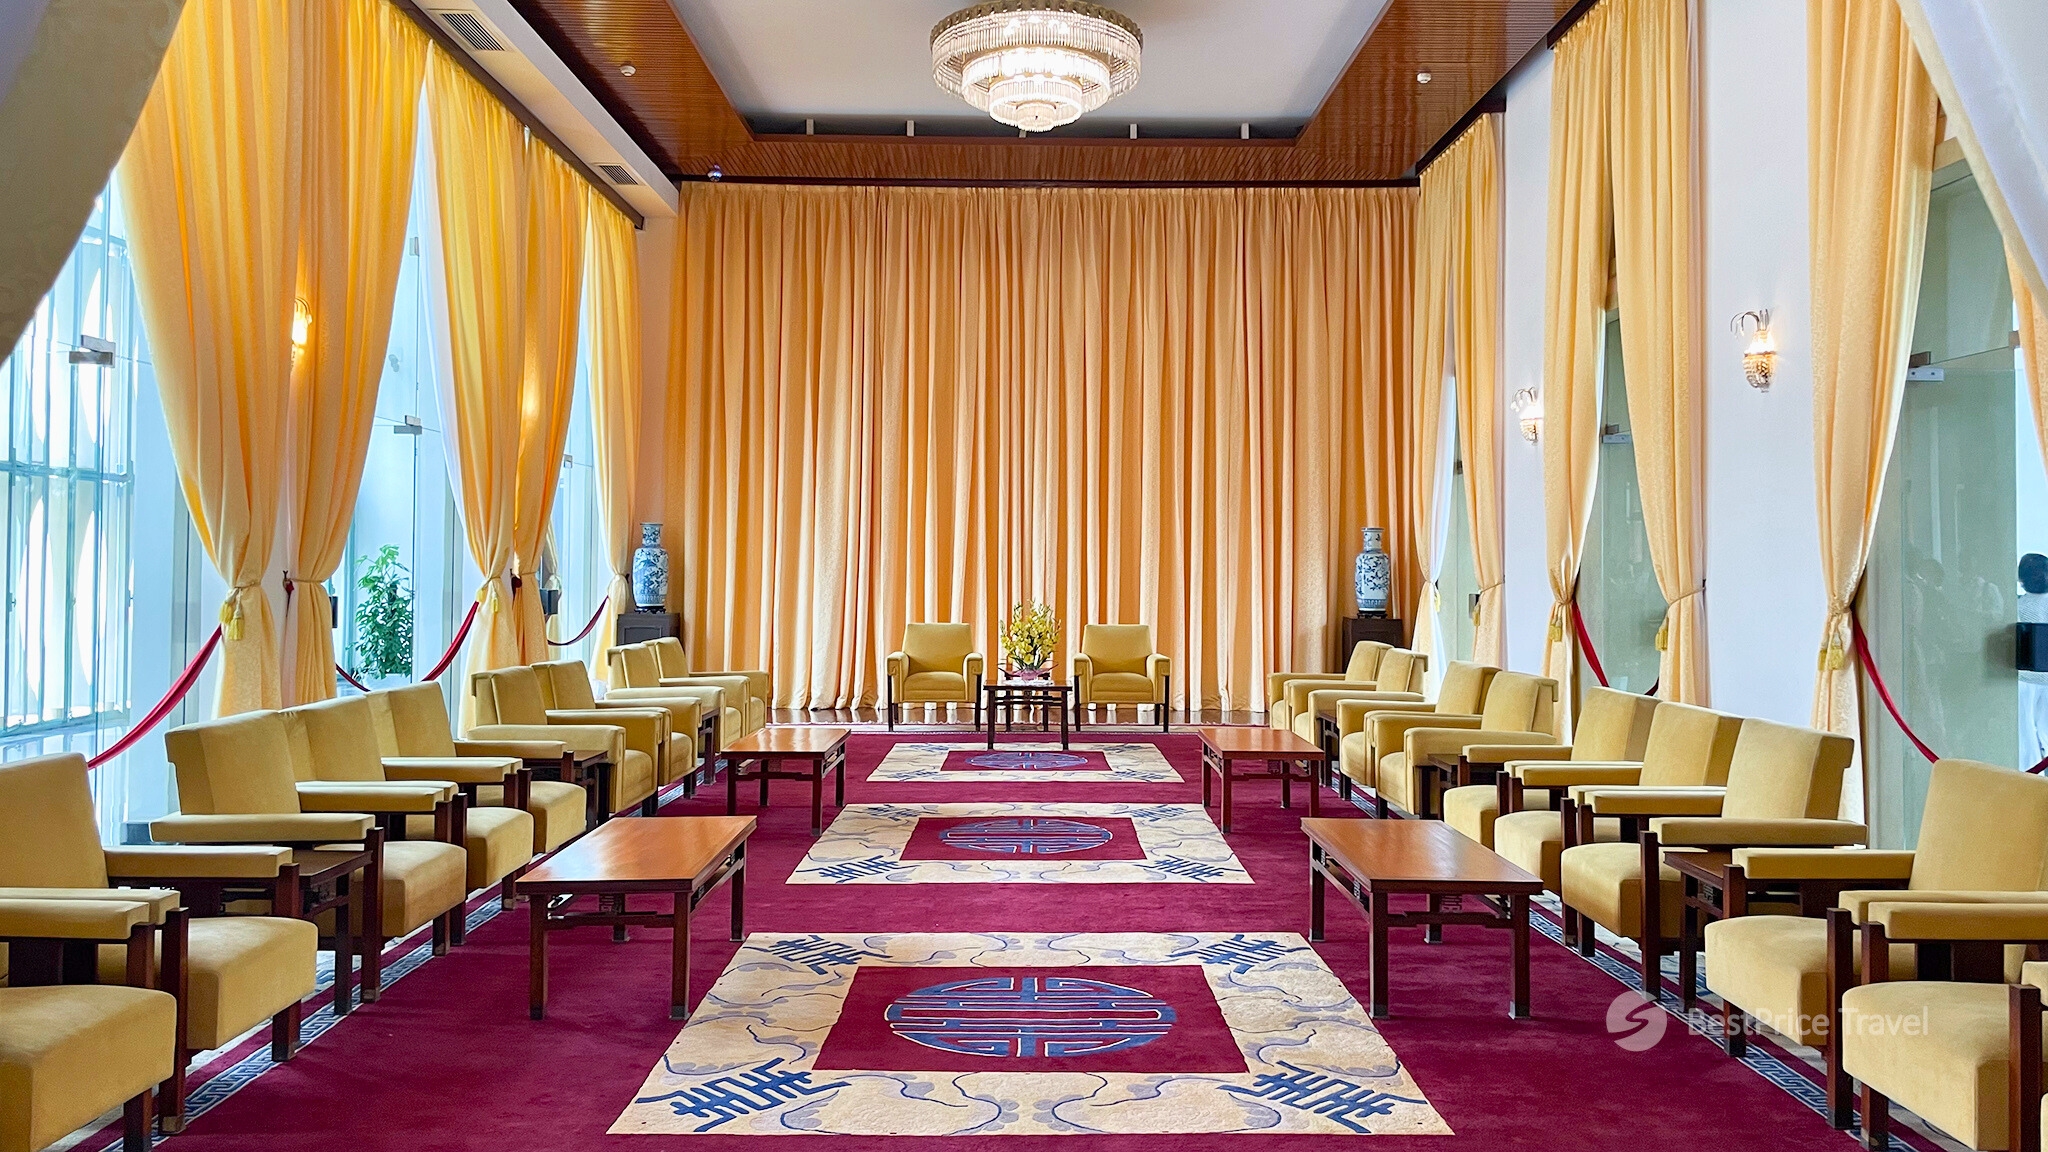 Vice President's Reception Salon Of Reunification Palace